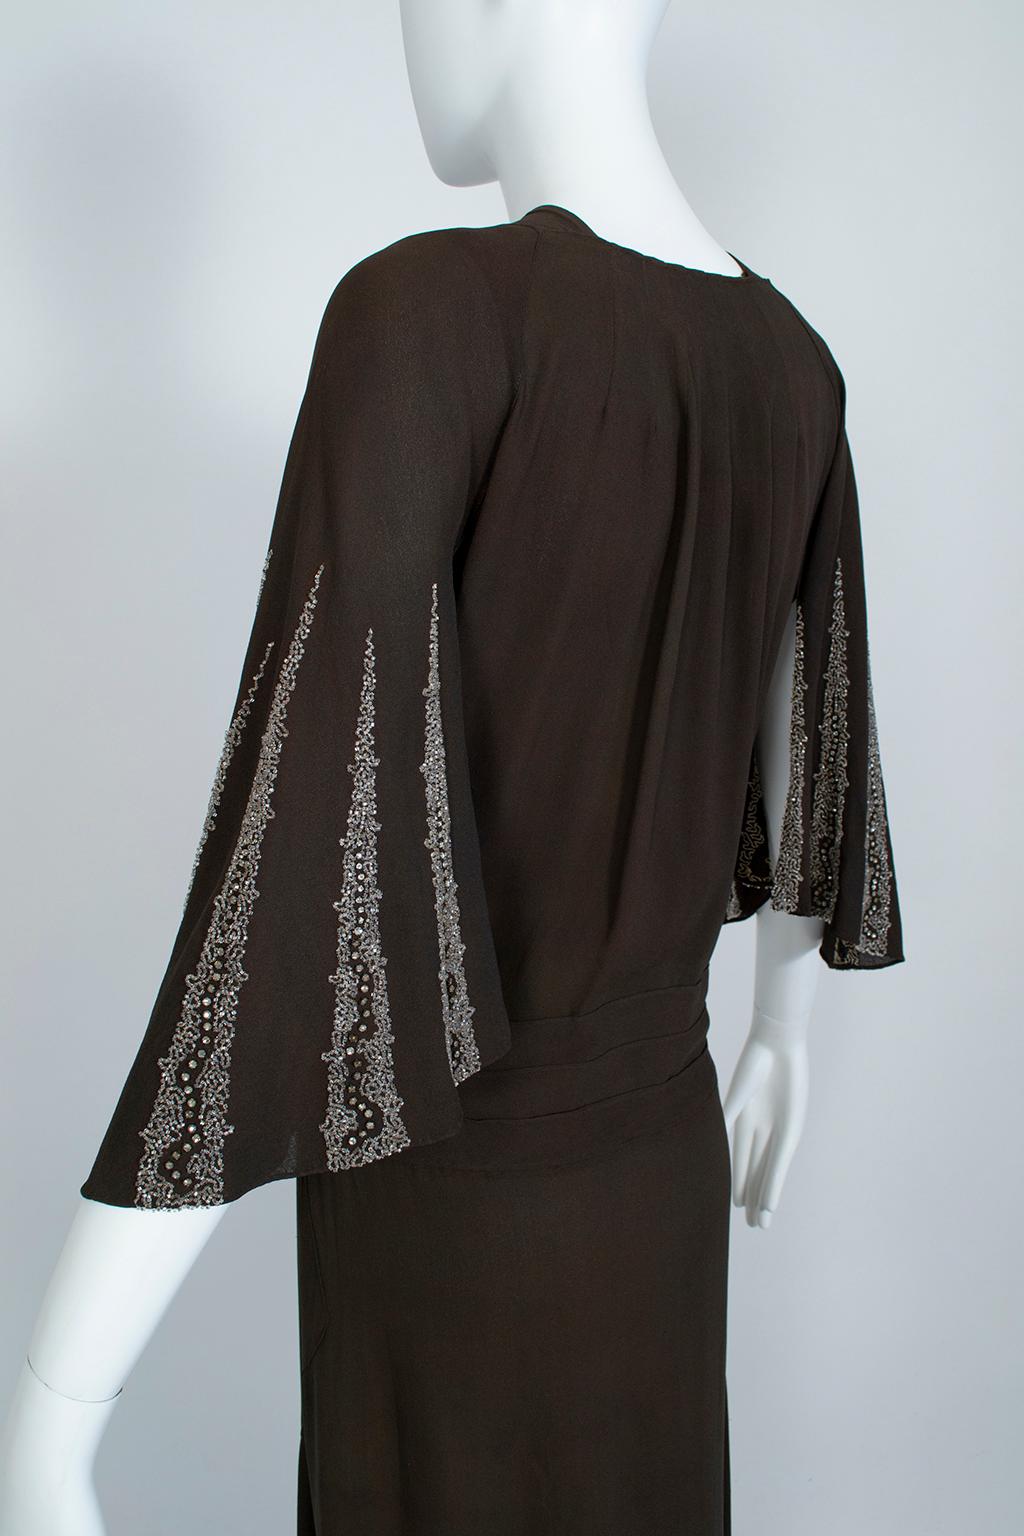 Robe kimono en crêpe de soie marron de style Régence avec manches tombantes en cristal - Med, années 1930 en vente 1